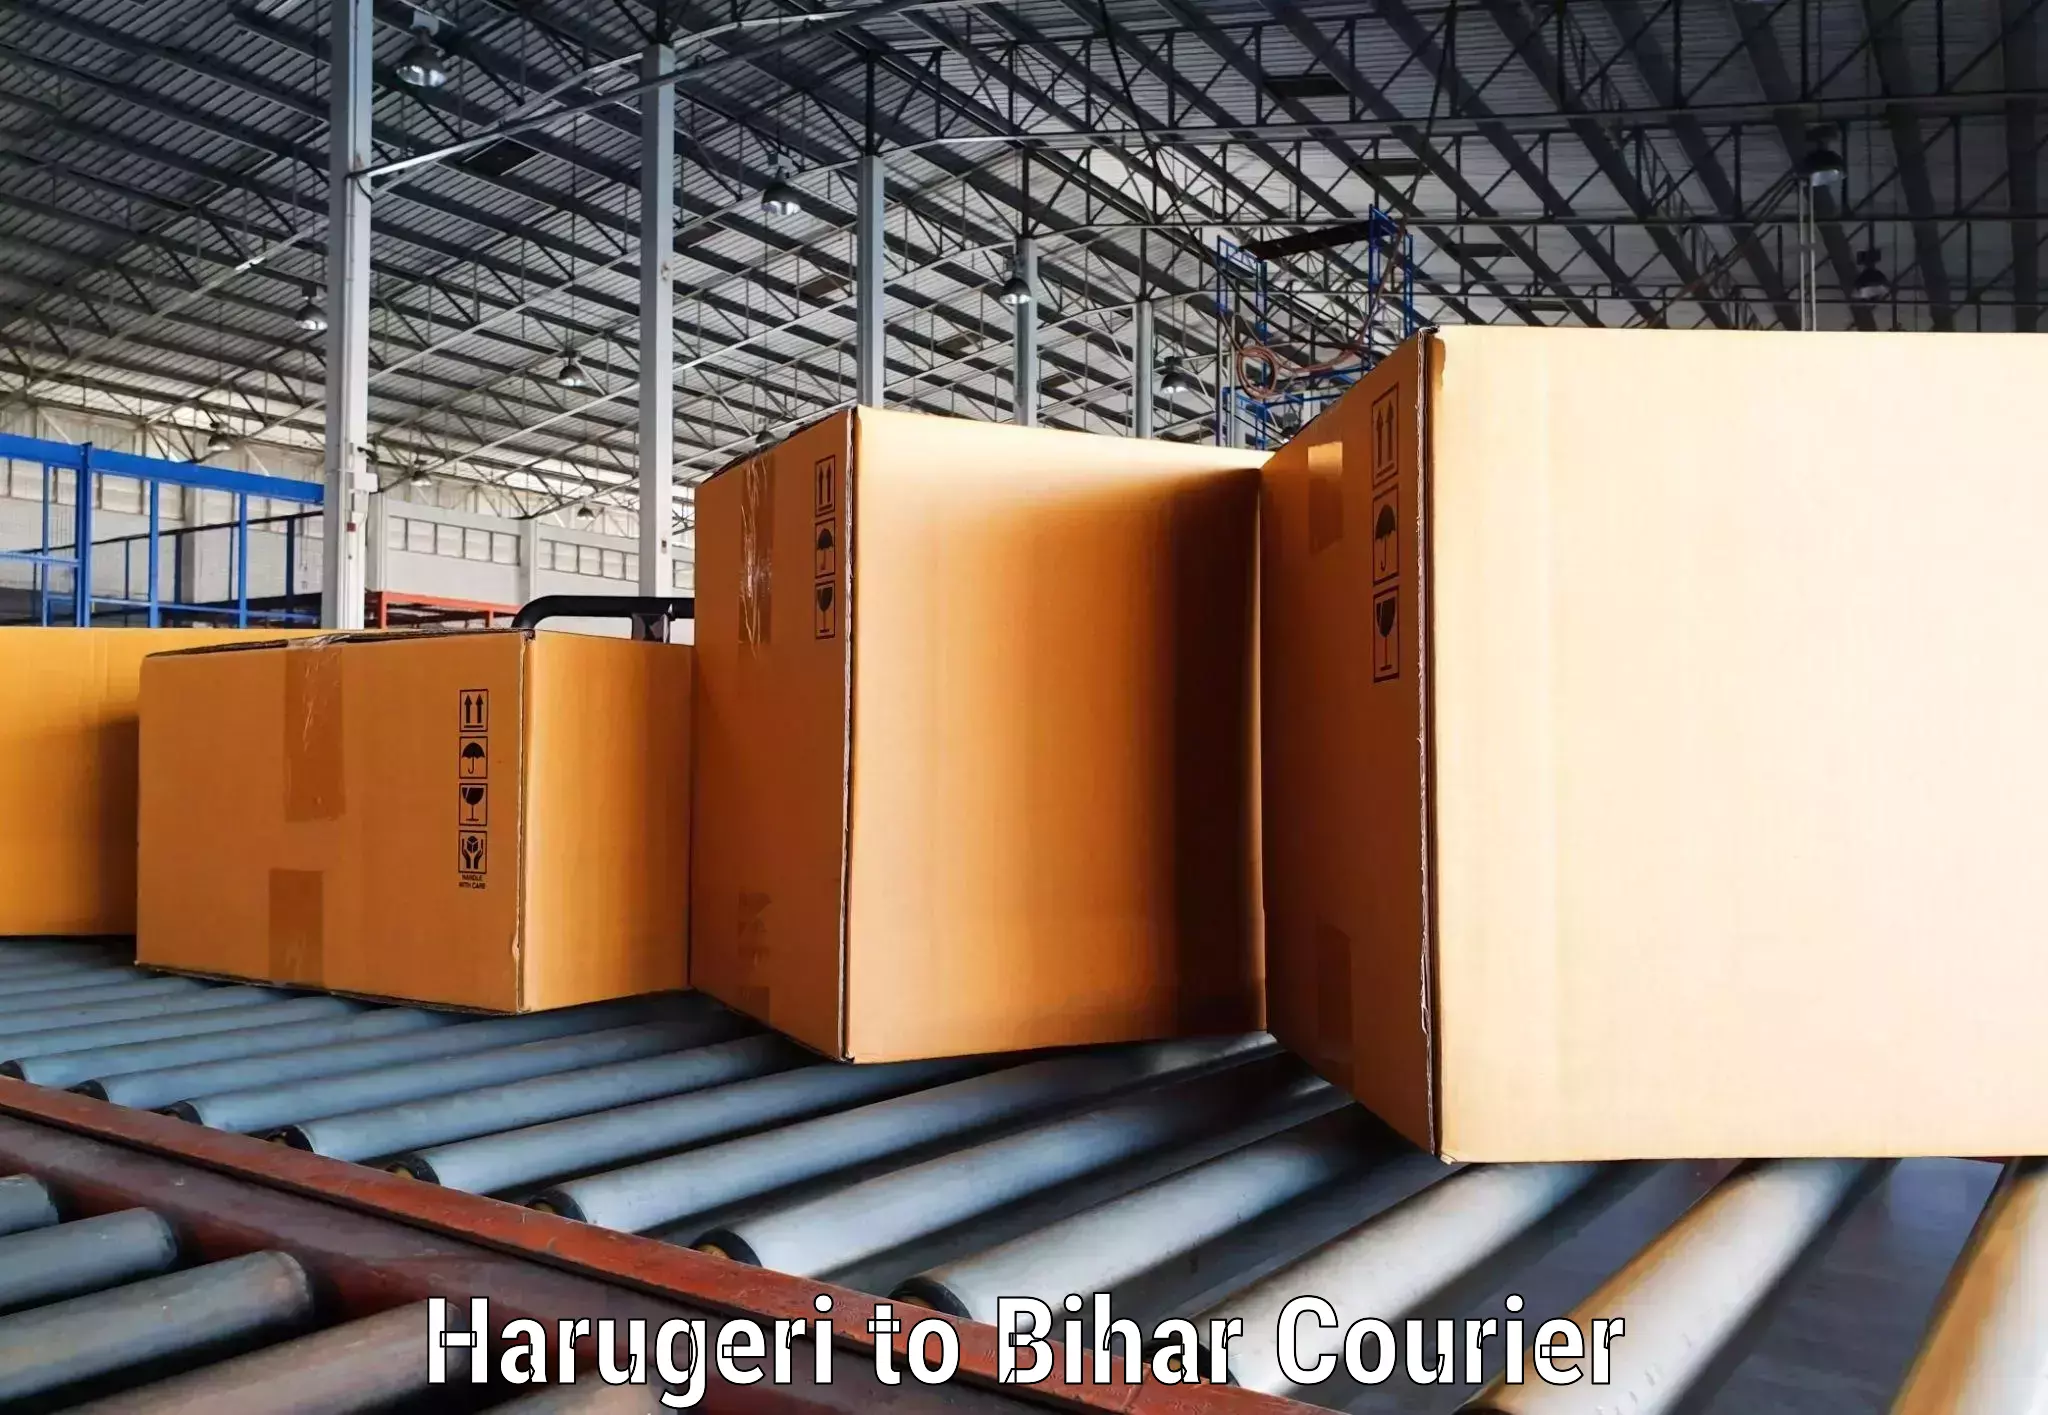 Modern courier technology Harugeri to Malmaliya